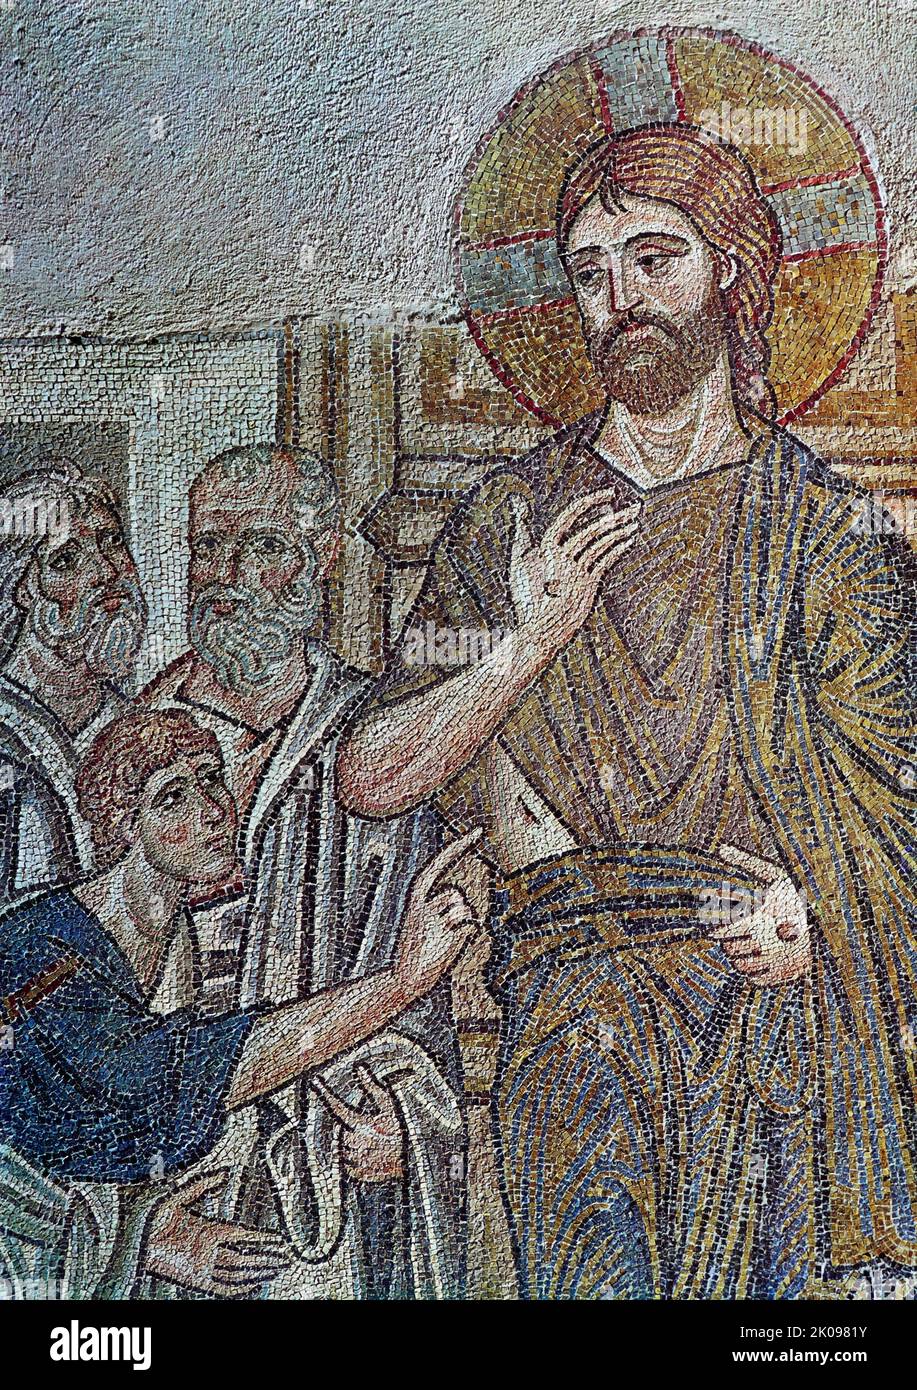 Incredulita di san Tommaso. Religiöse Malerei von Jesus Christus. Stockfoto